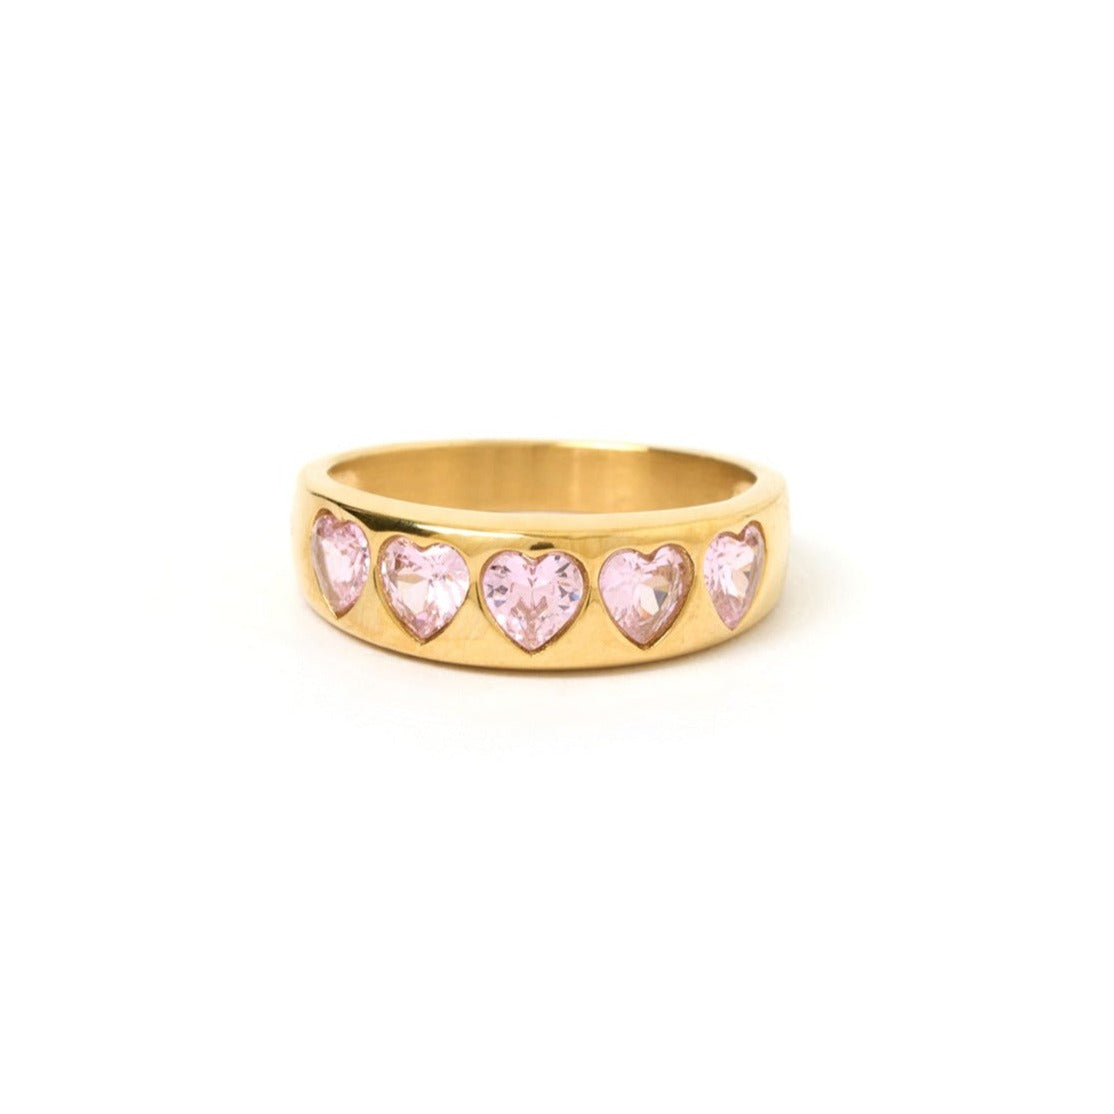 J'adore Gold Ring - Pink